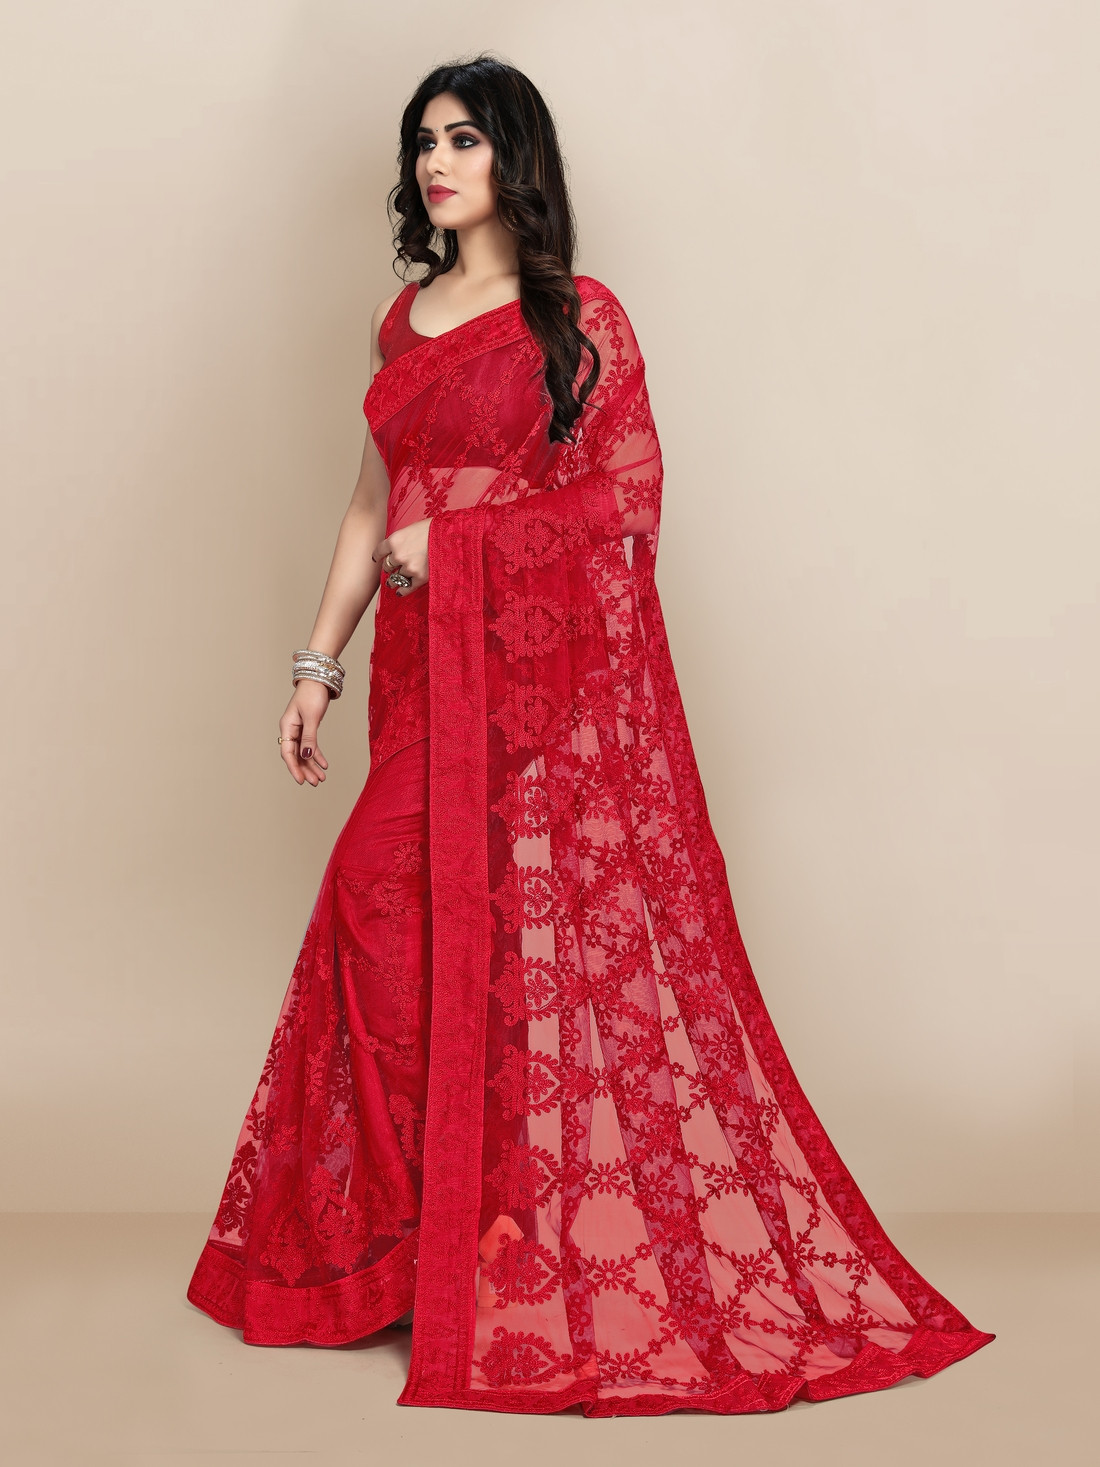 Super Net beautiful Designer embroidery Saree - Red